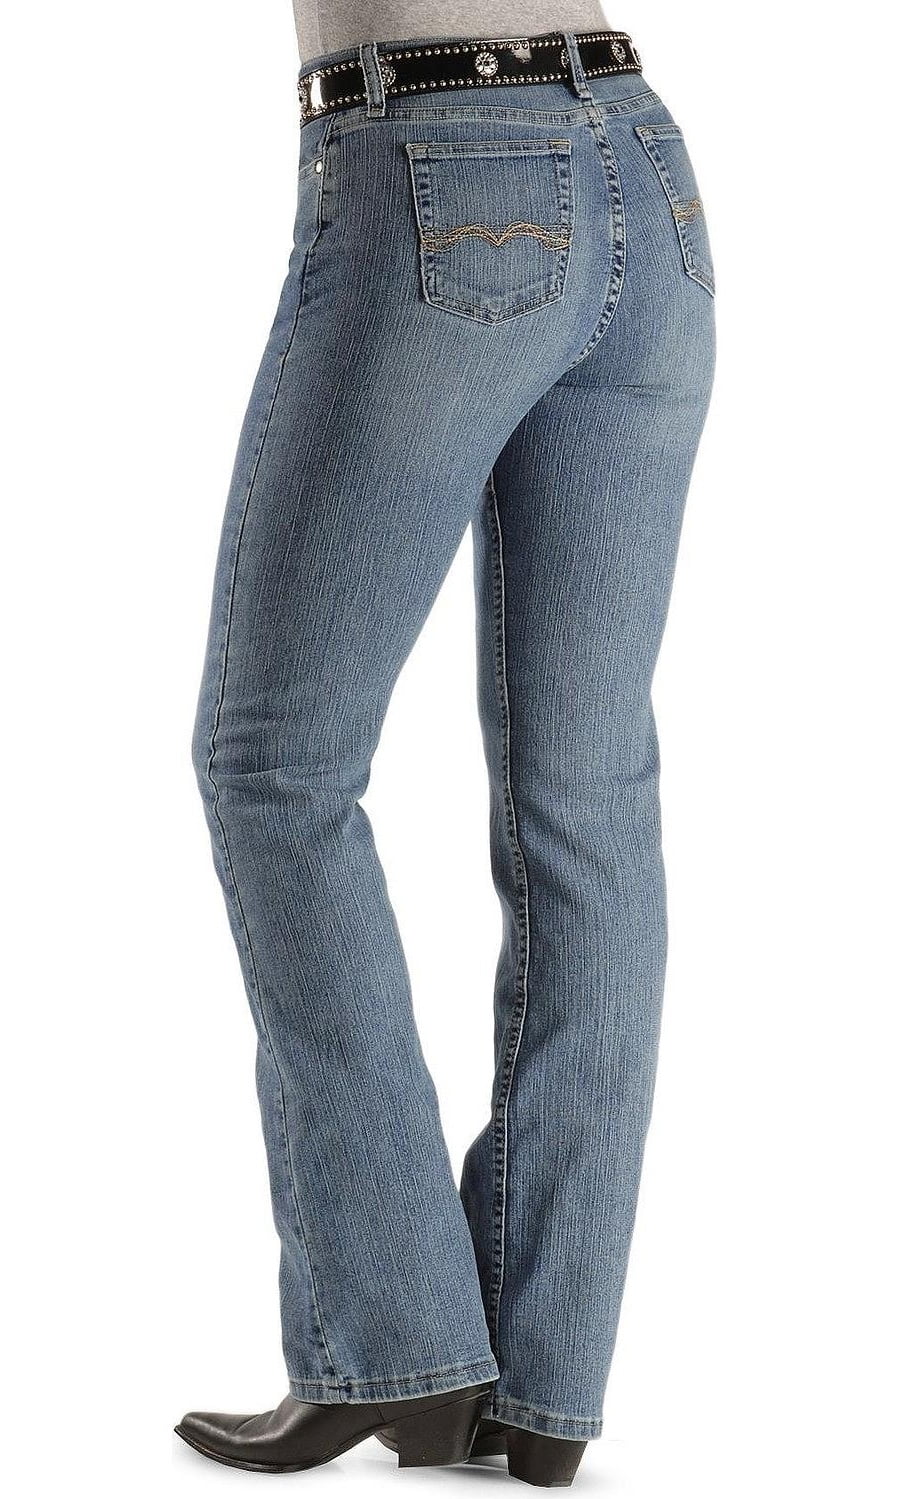 Arriba 88+ imagen womens wrangler jeans walmart